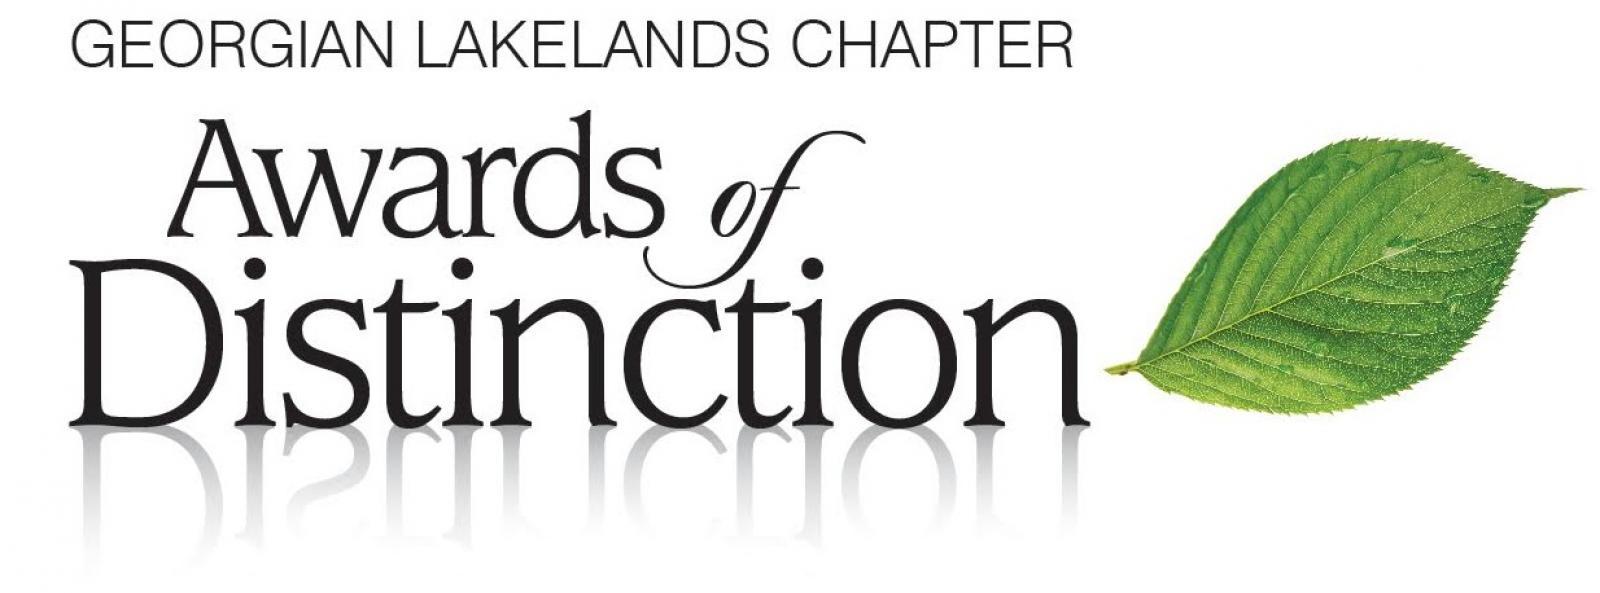 Georgian Lakelands Chapter Awards